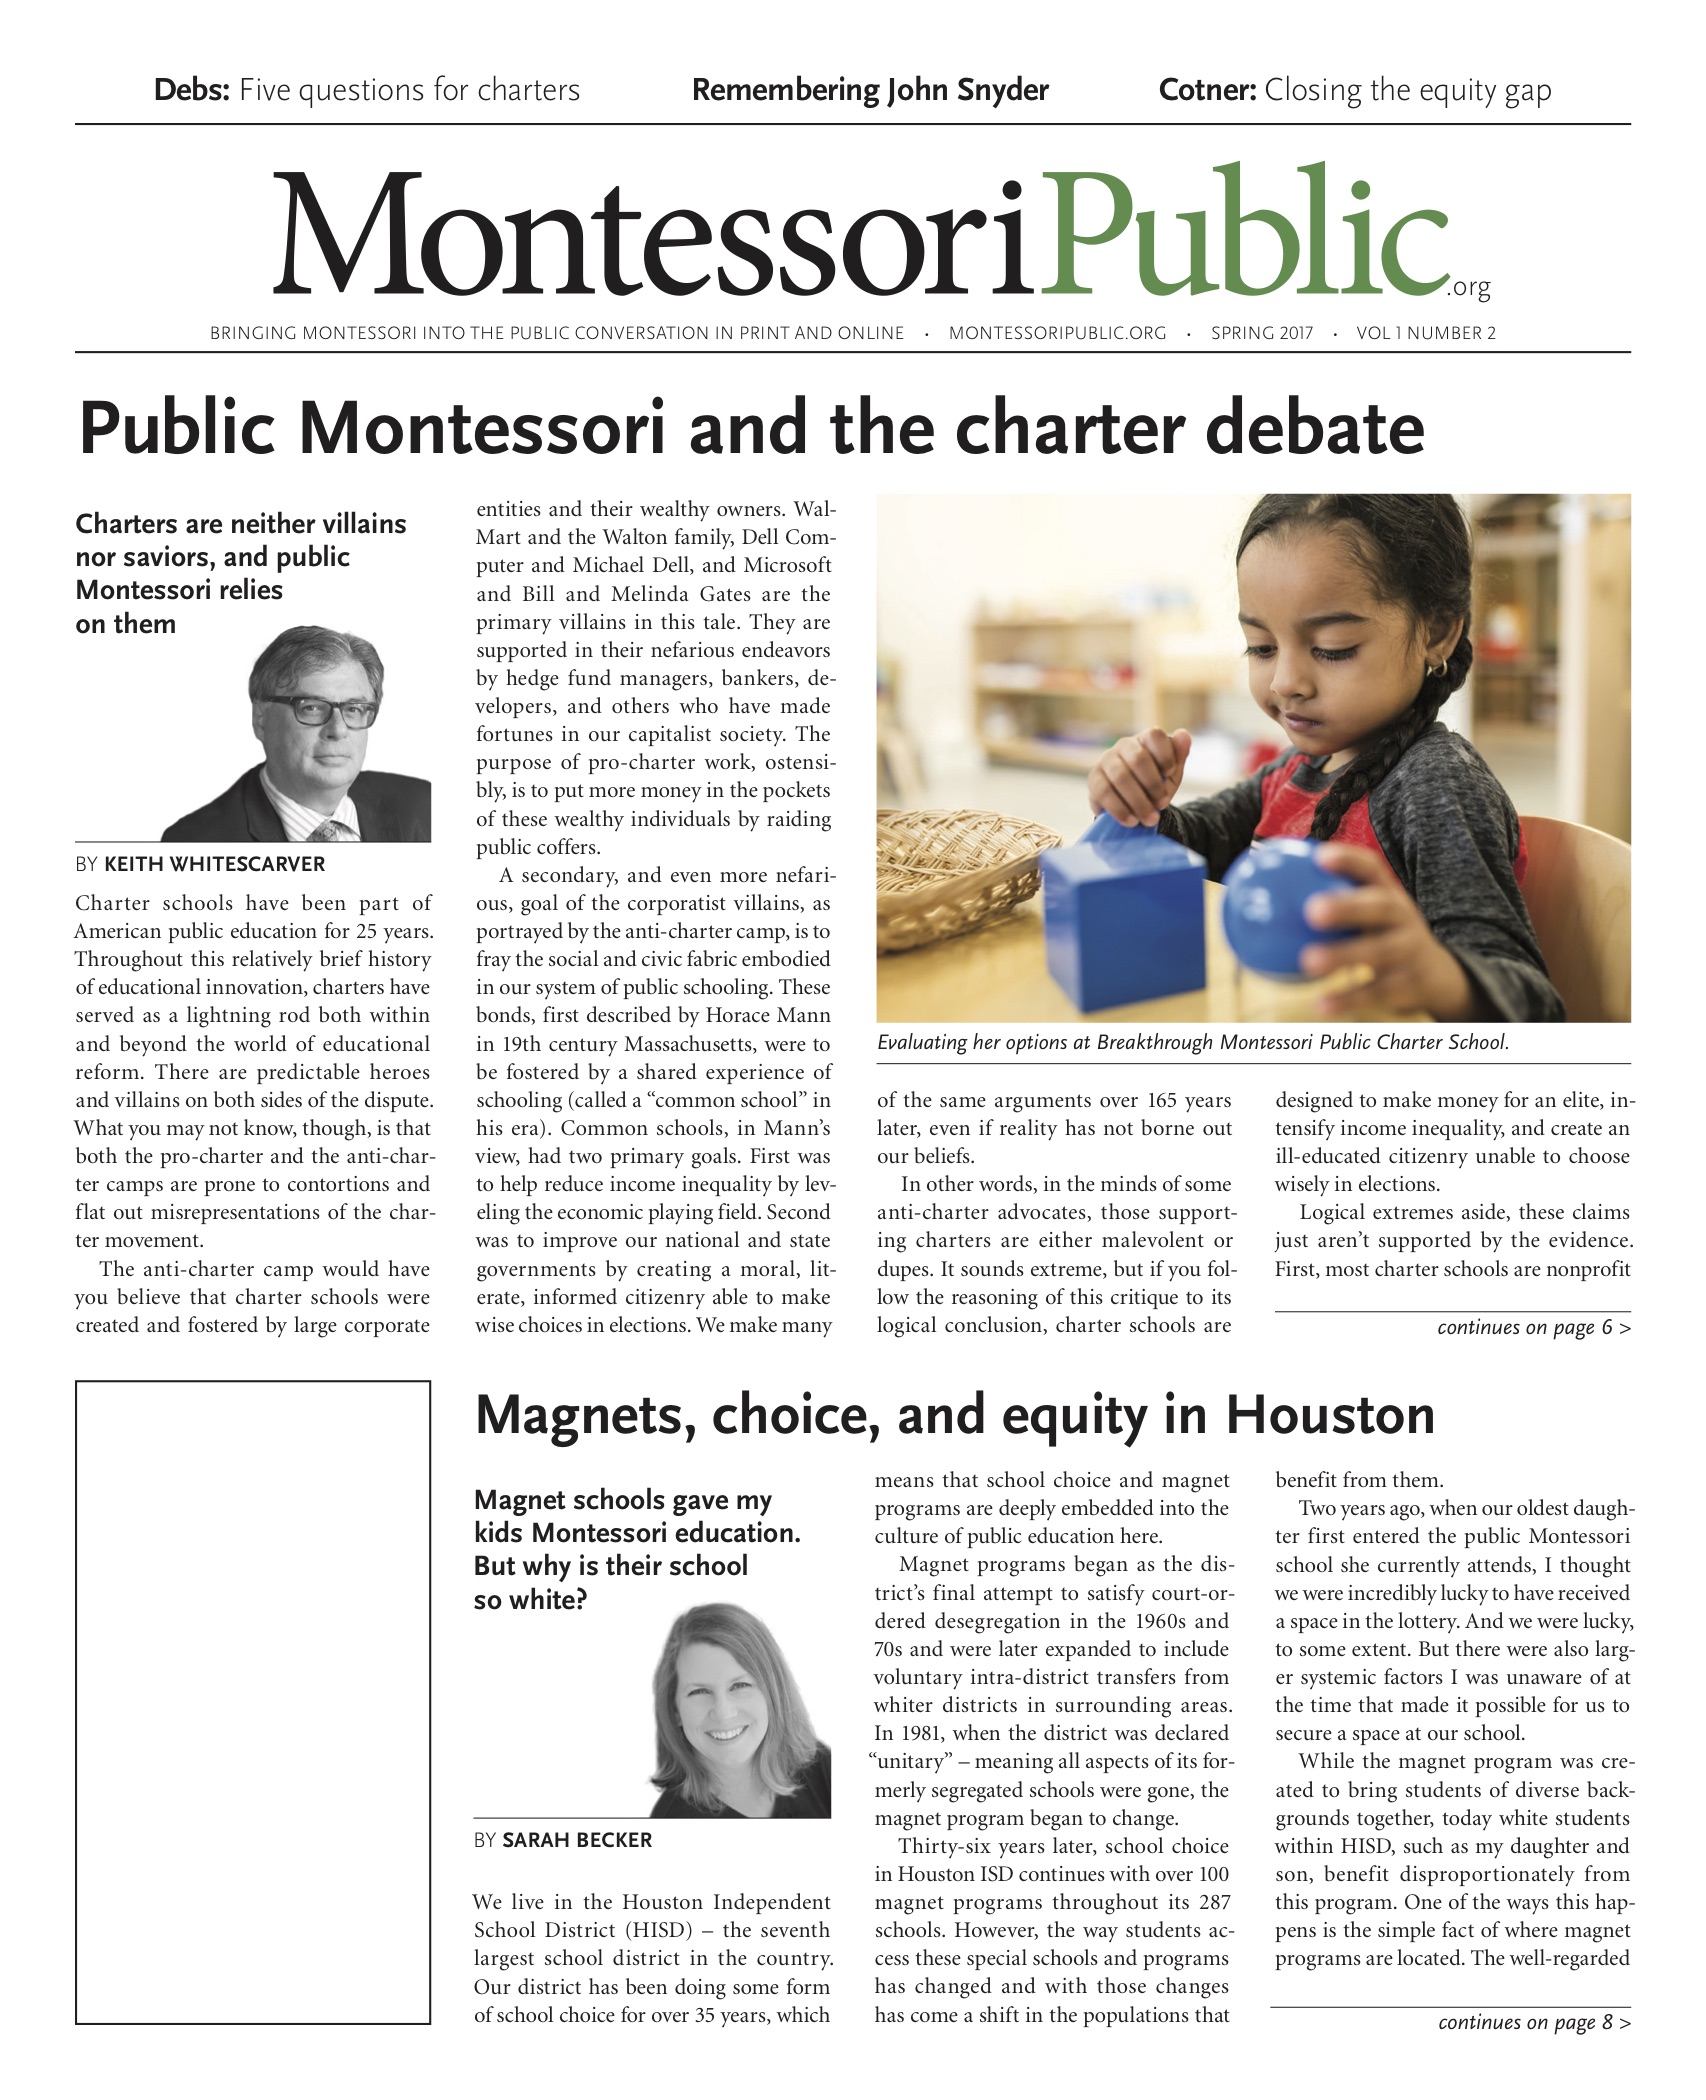 MontessoriPublic — Print Edition Vol.1 #2